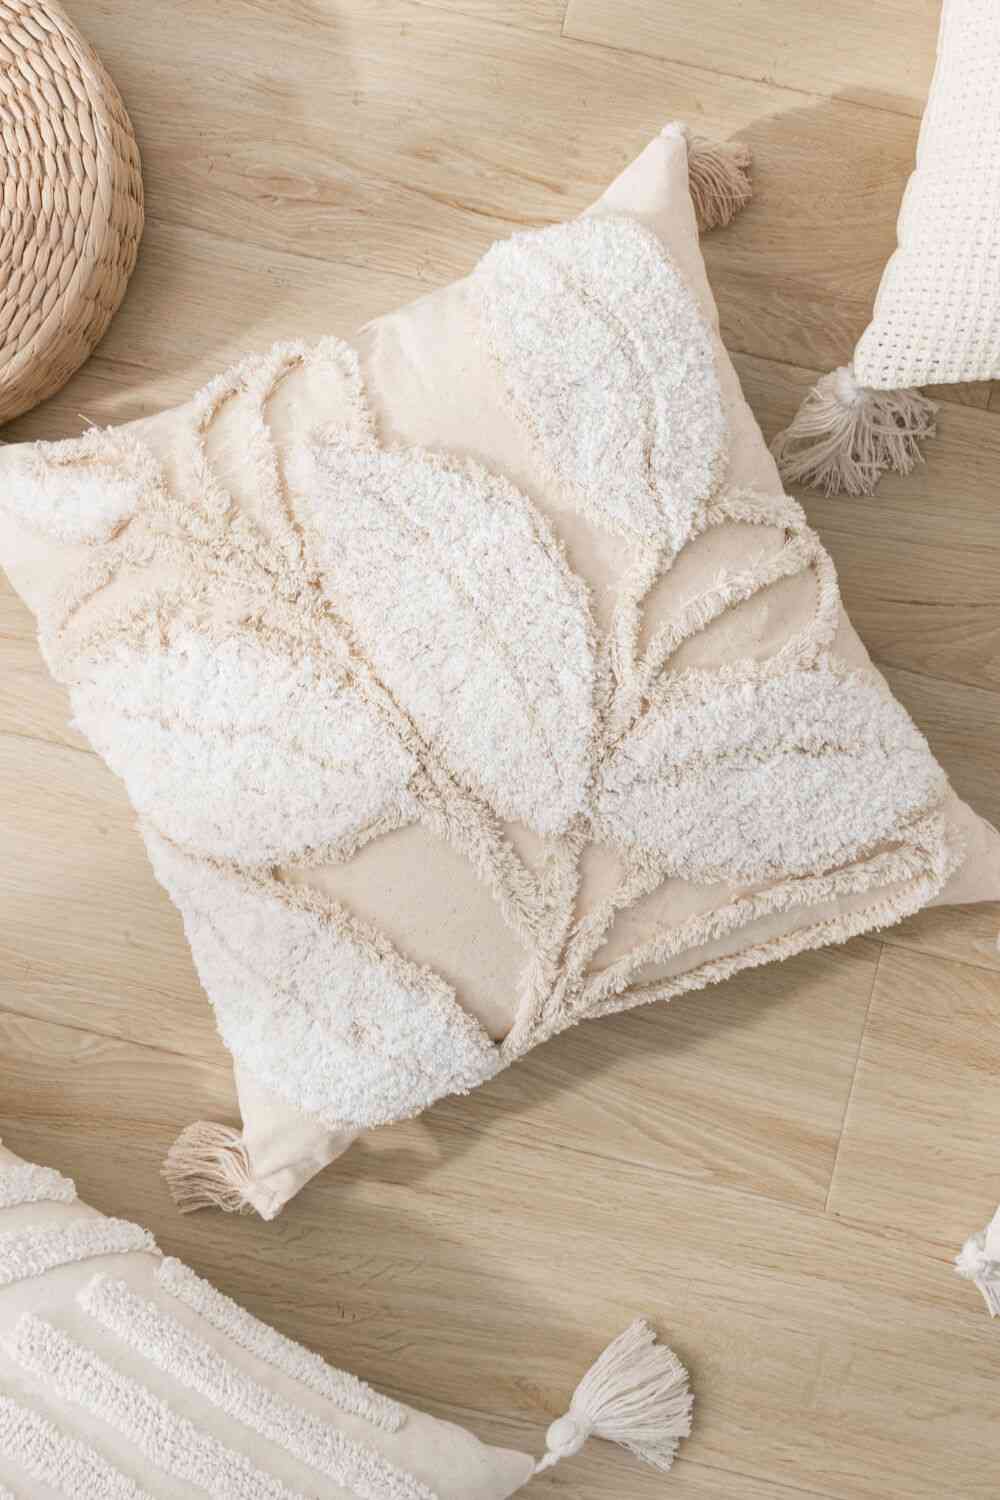 Textured Decorative Throw Pillowcase, 5 patterns